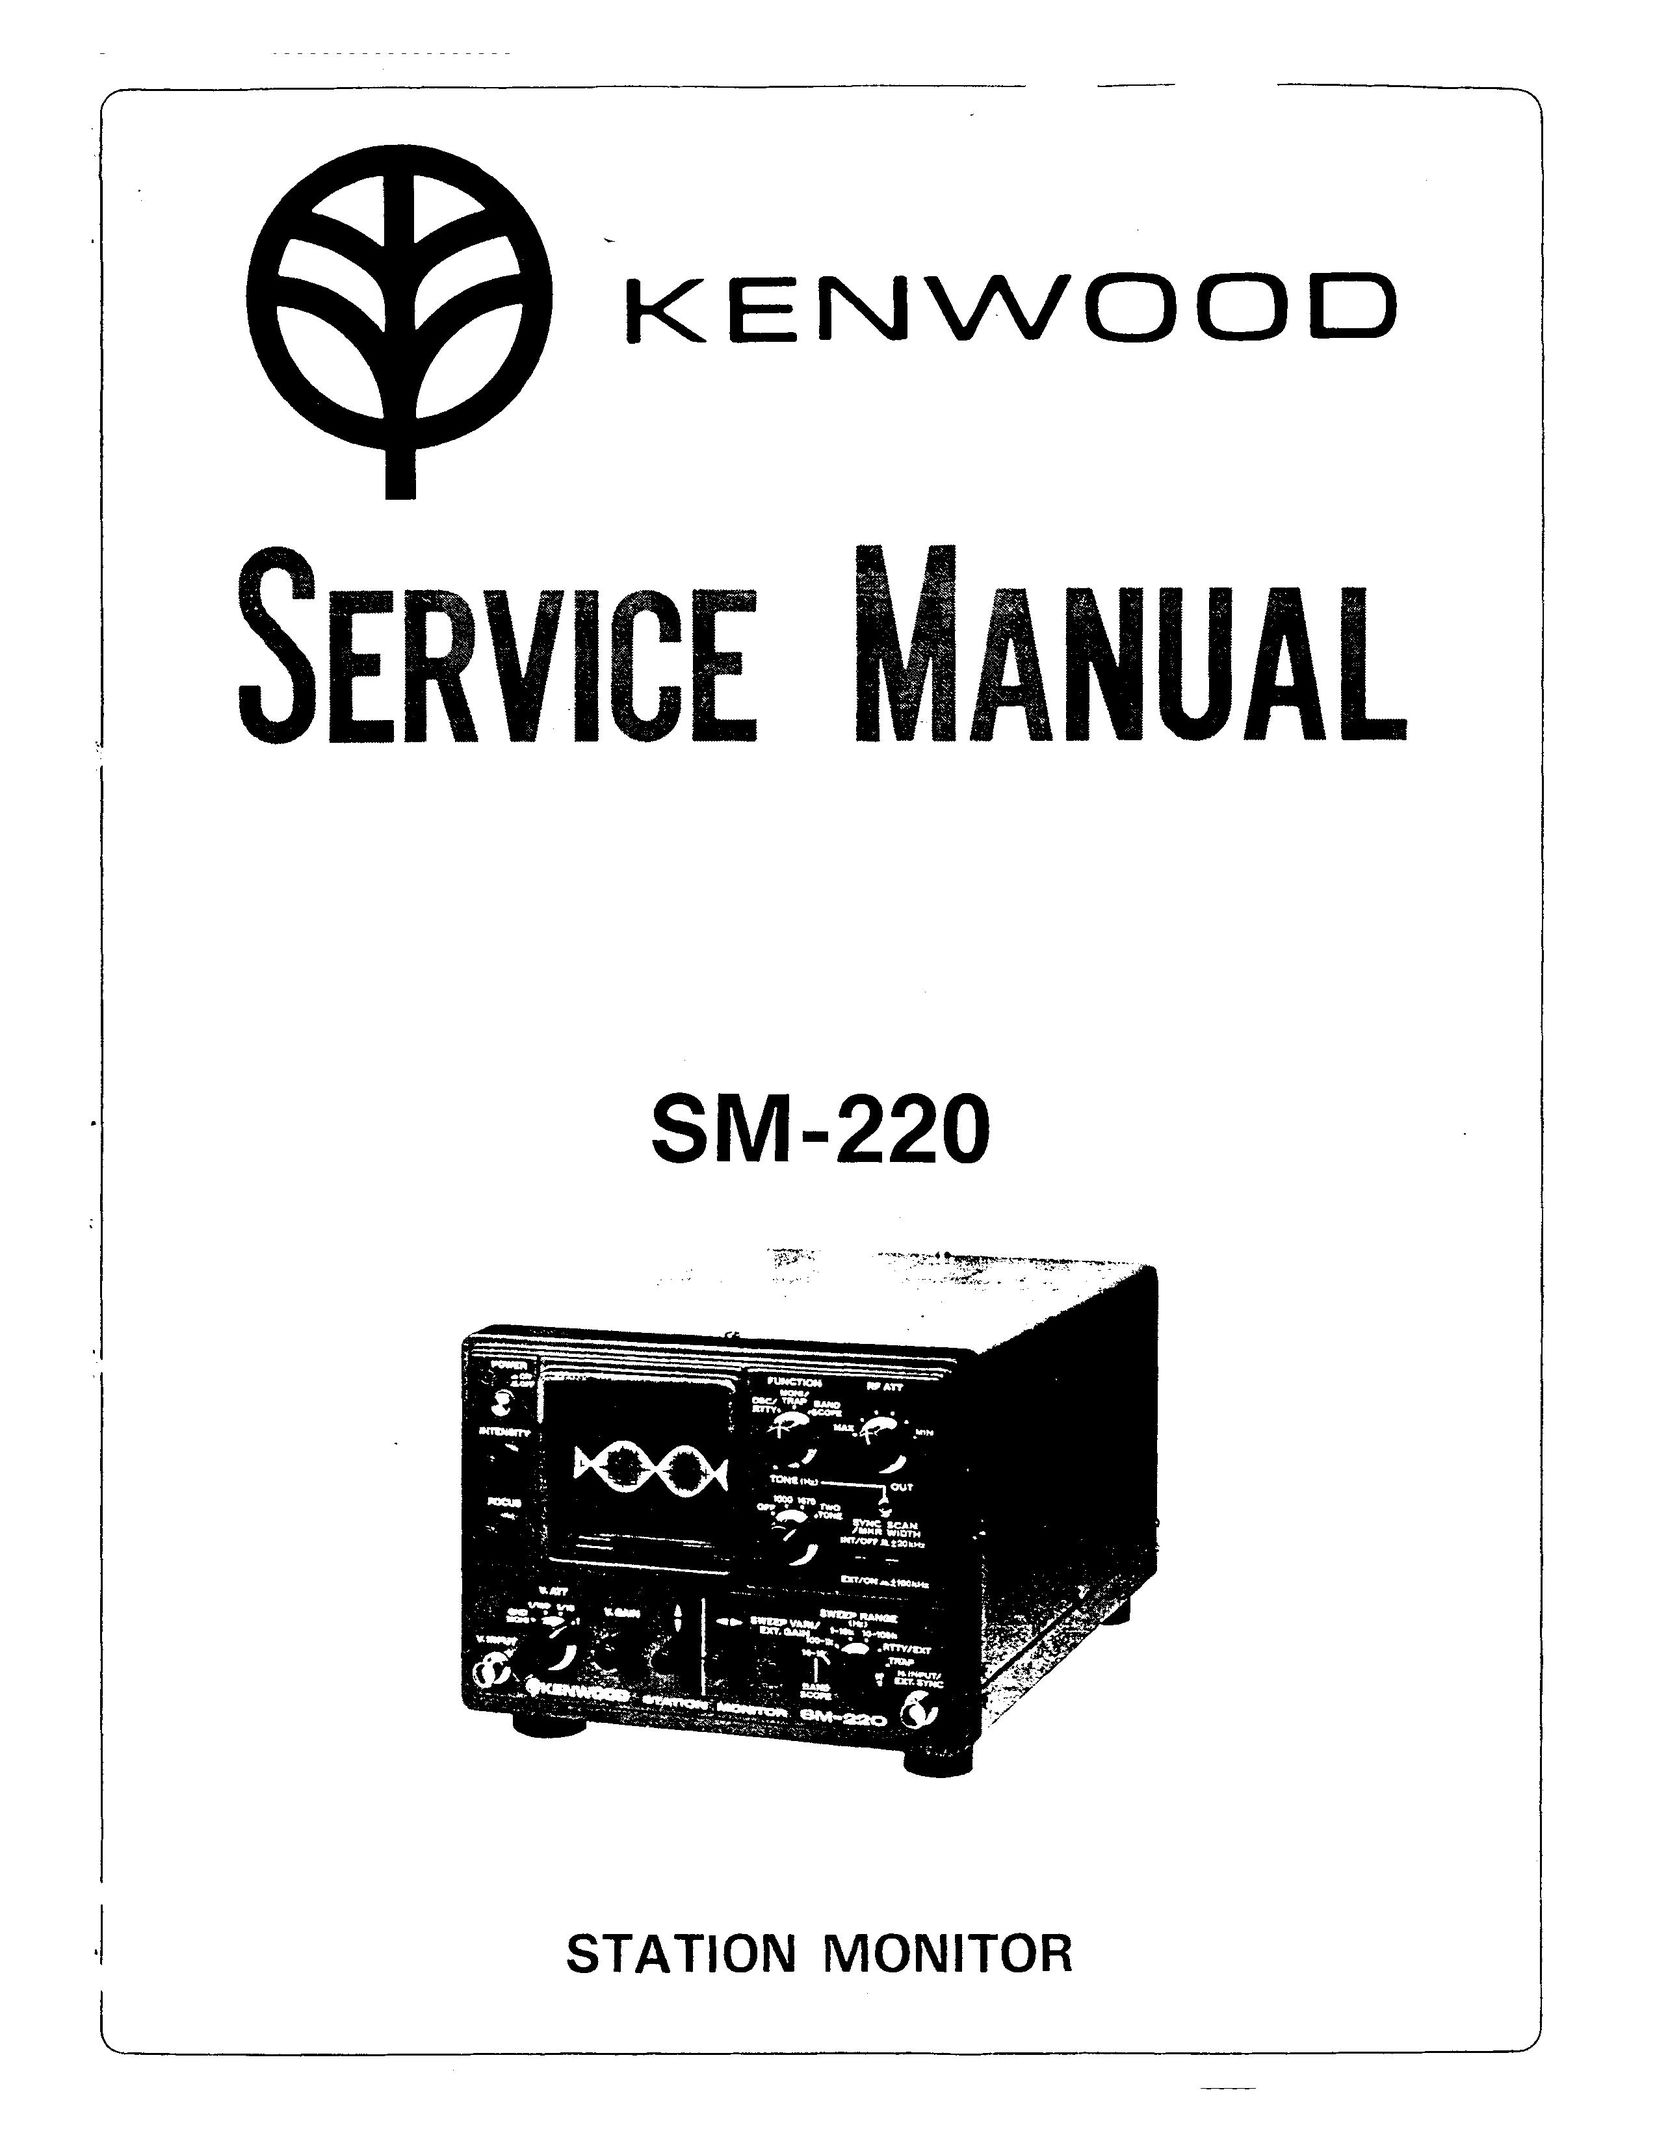 Kenwood kenwood station monitor Musical Table User Manual